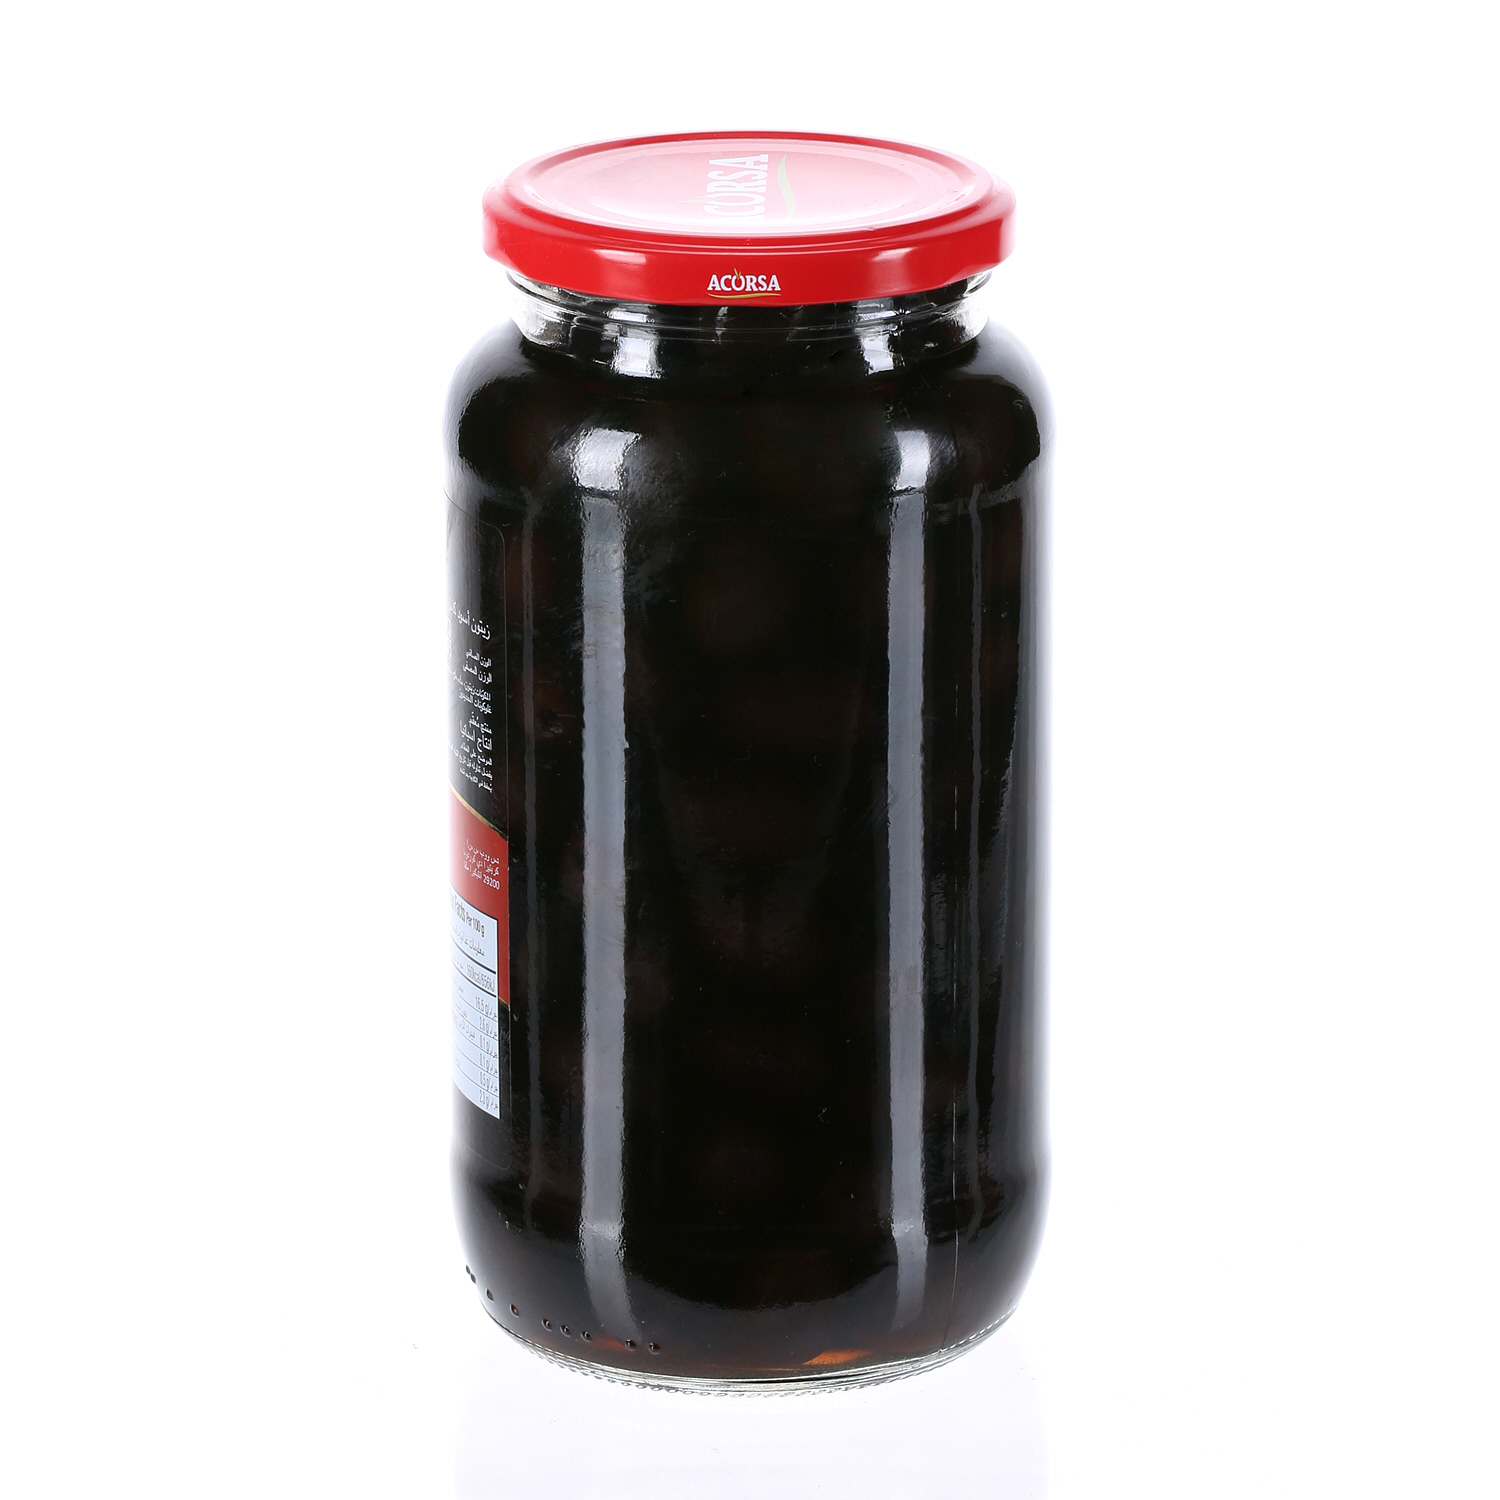 Acorsa Olives Black Plain Jar 575gm